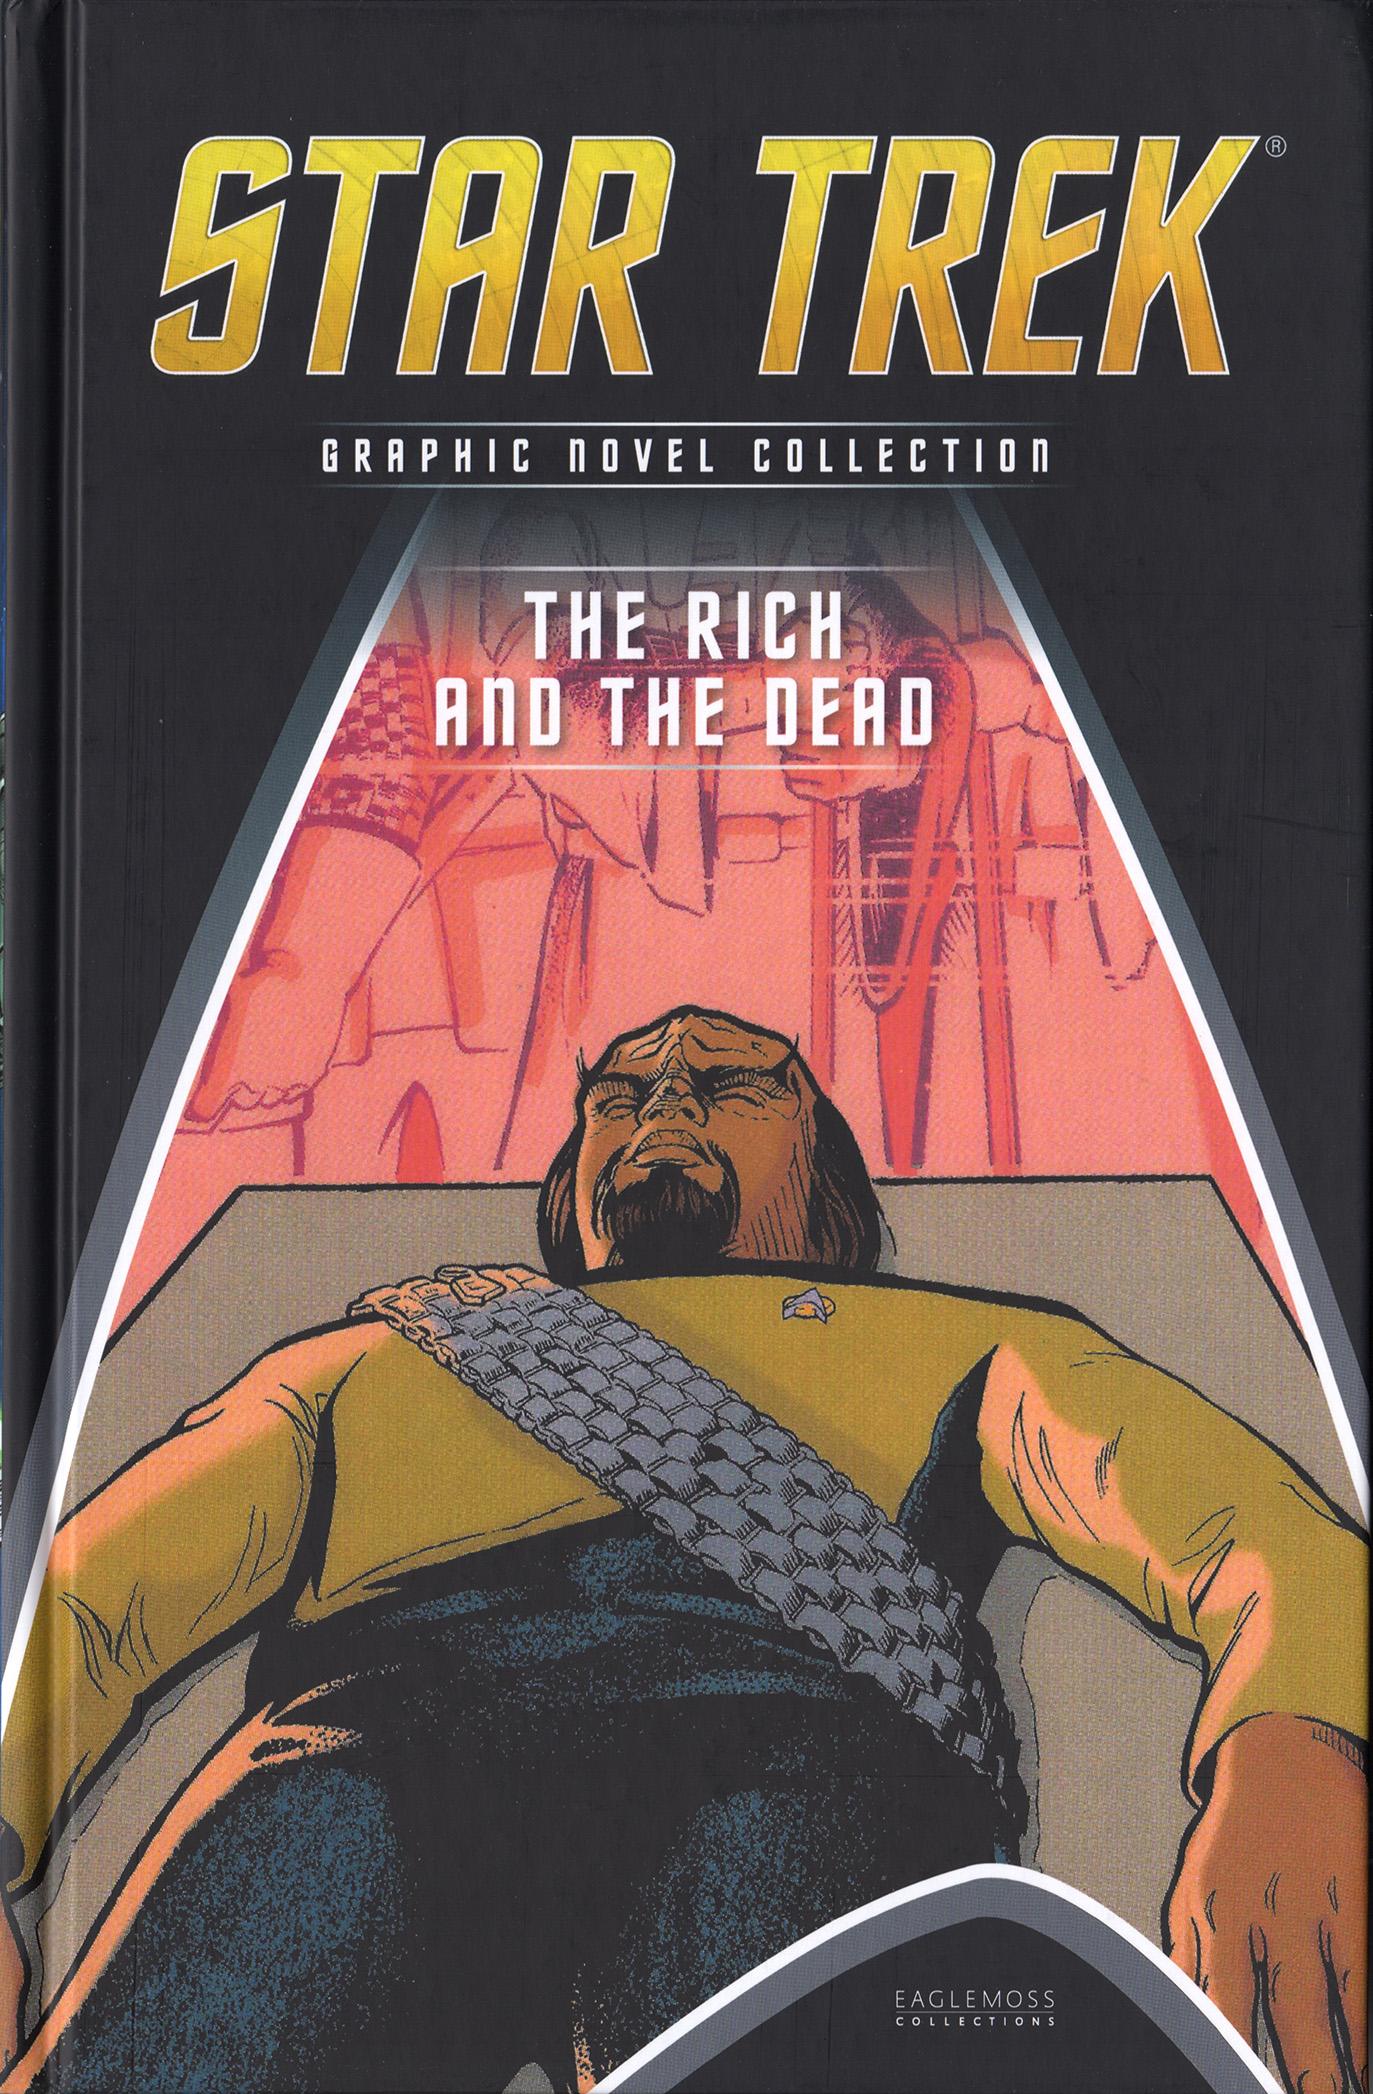 Eaglemoss Graphic Novel Collection #94